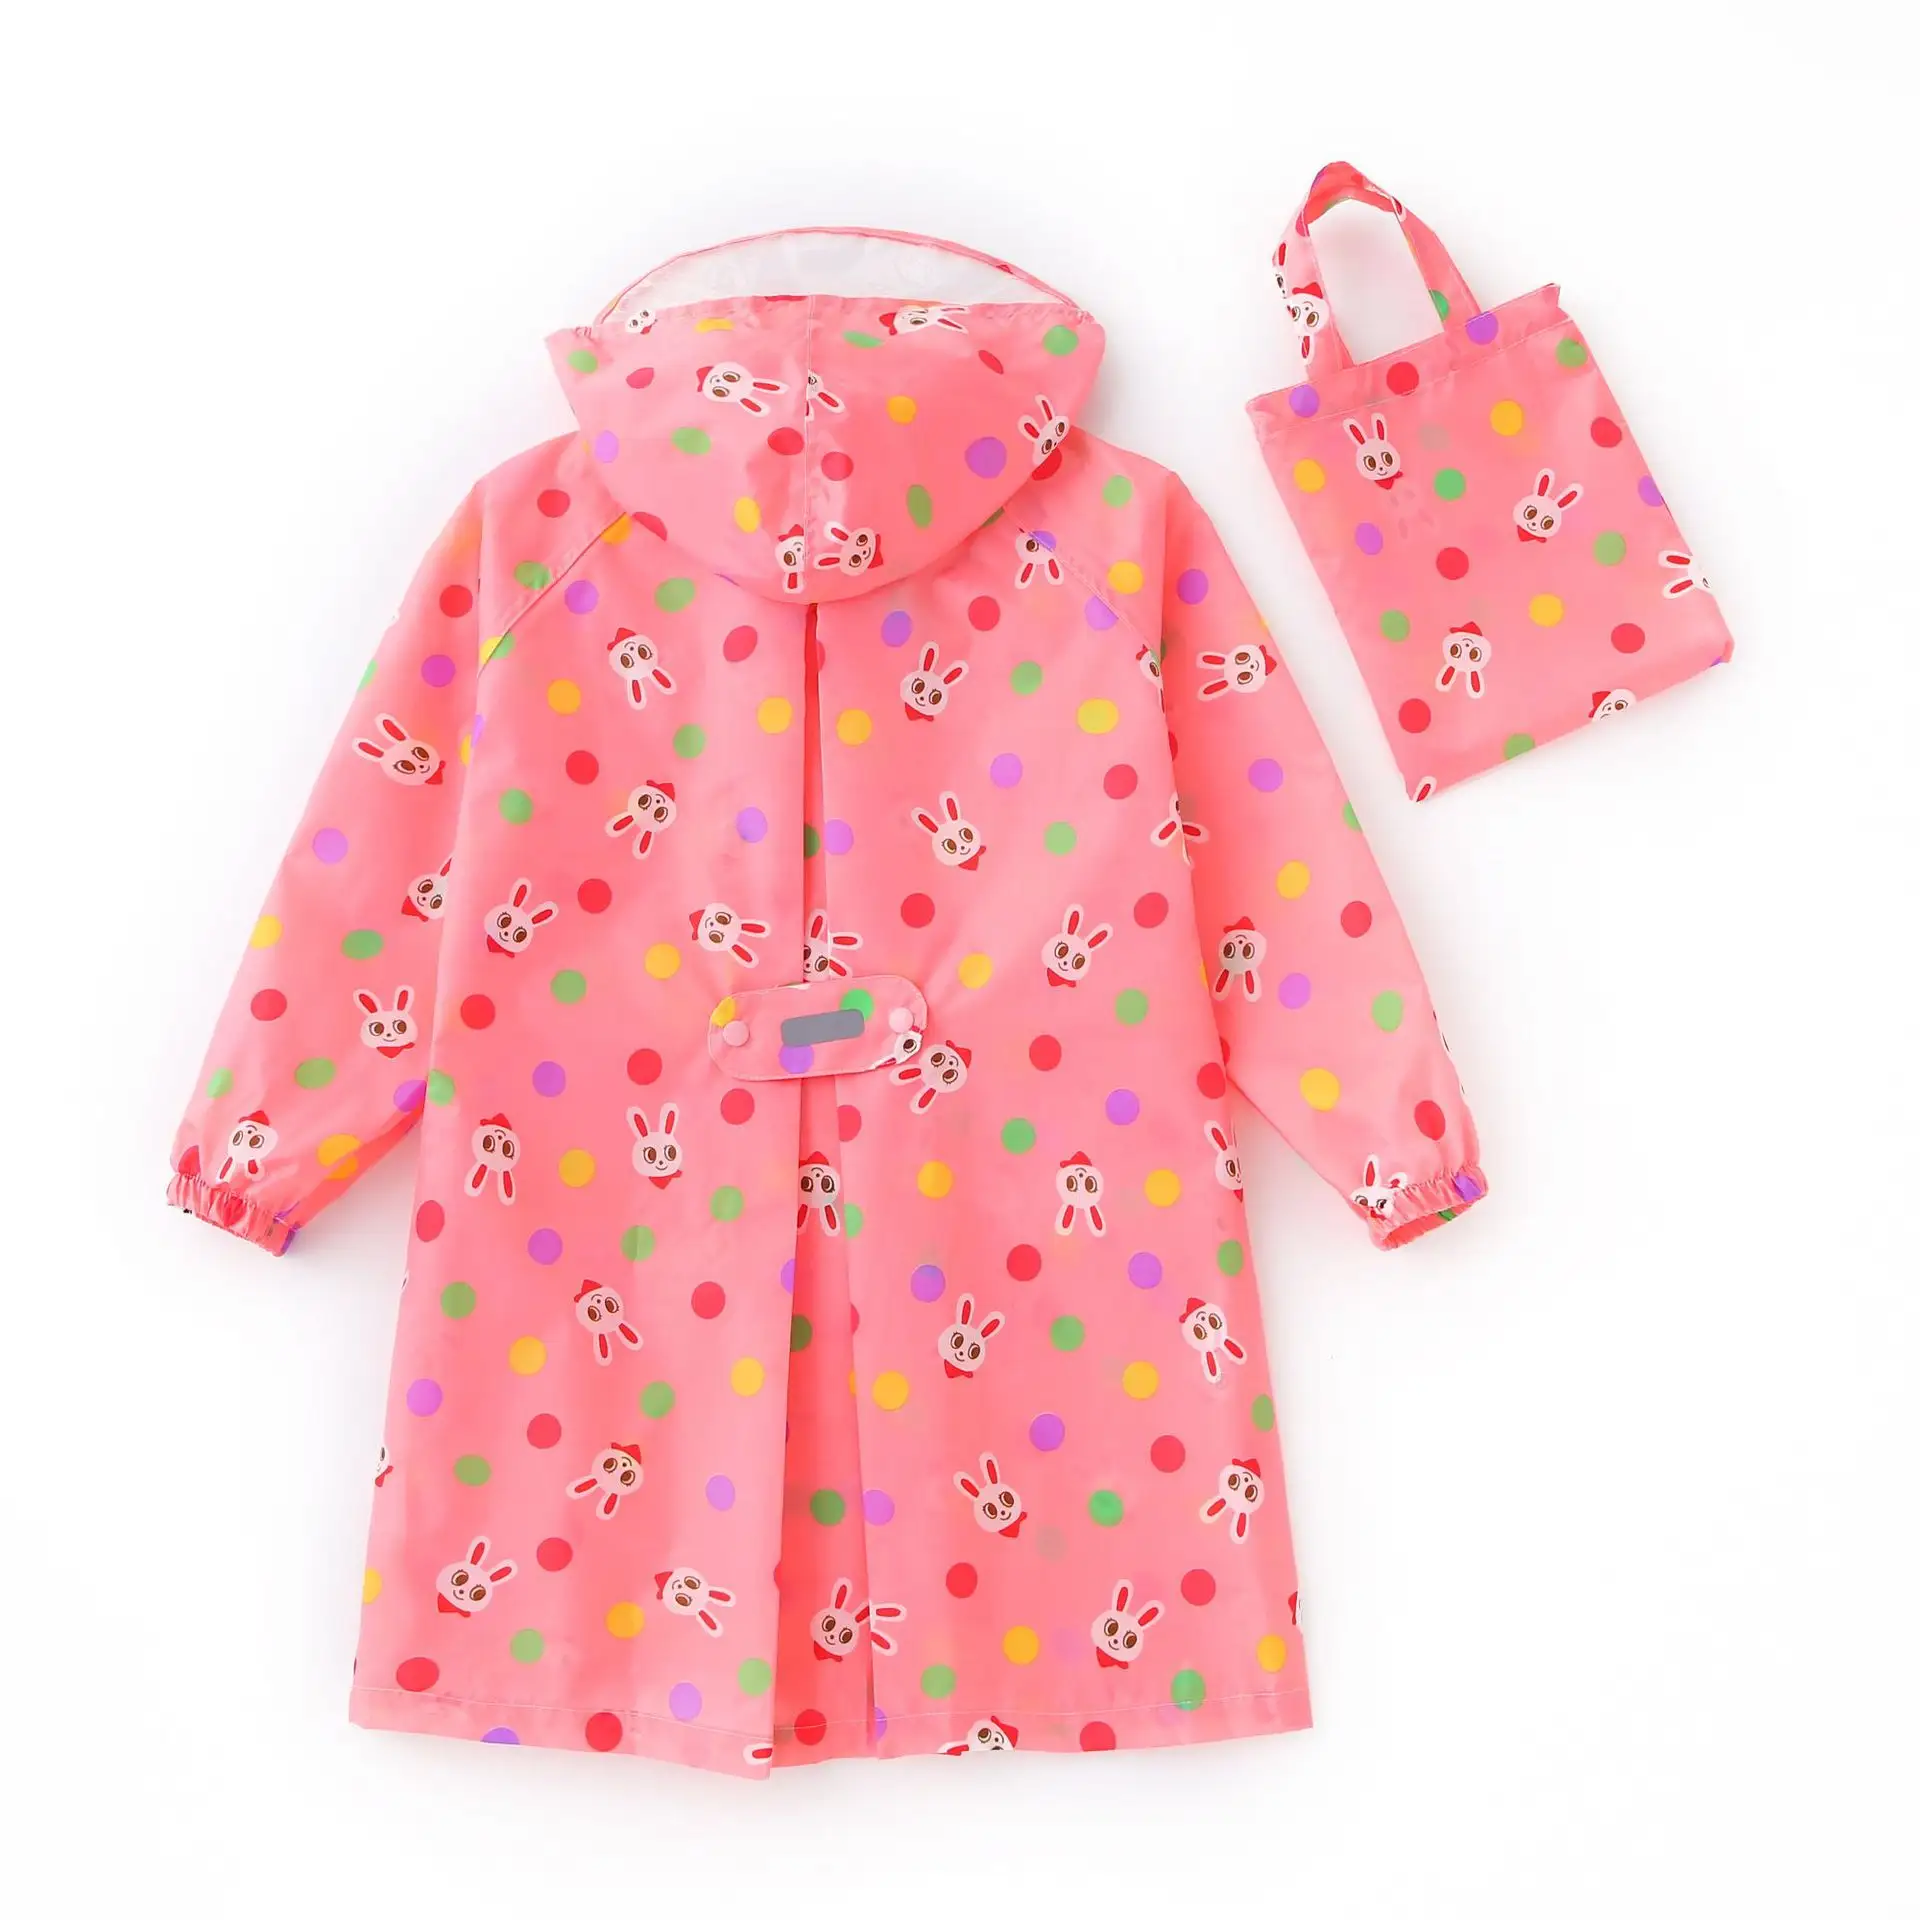 Cheap Plastic Waterproof Rain Coats Stylish Rainwear for Children